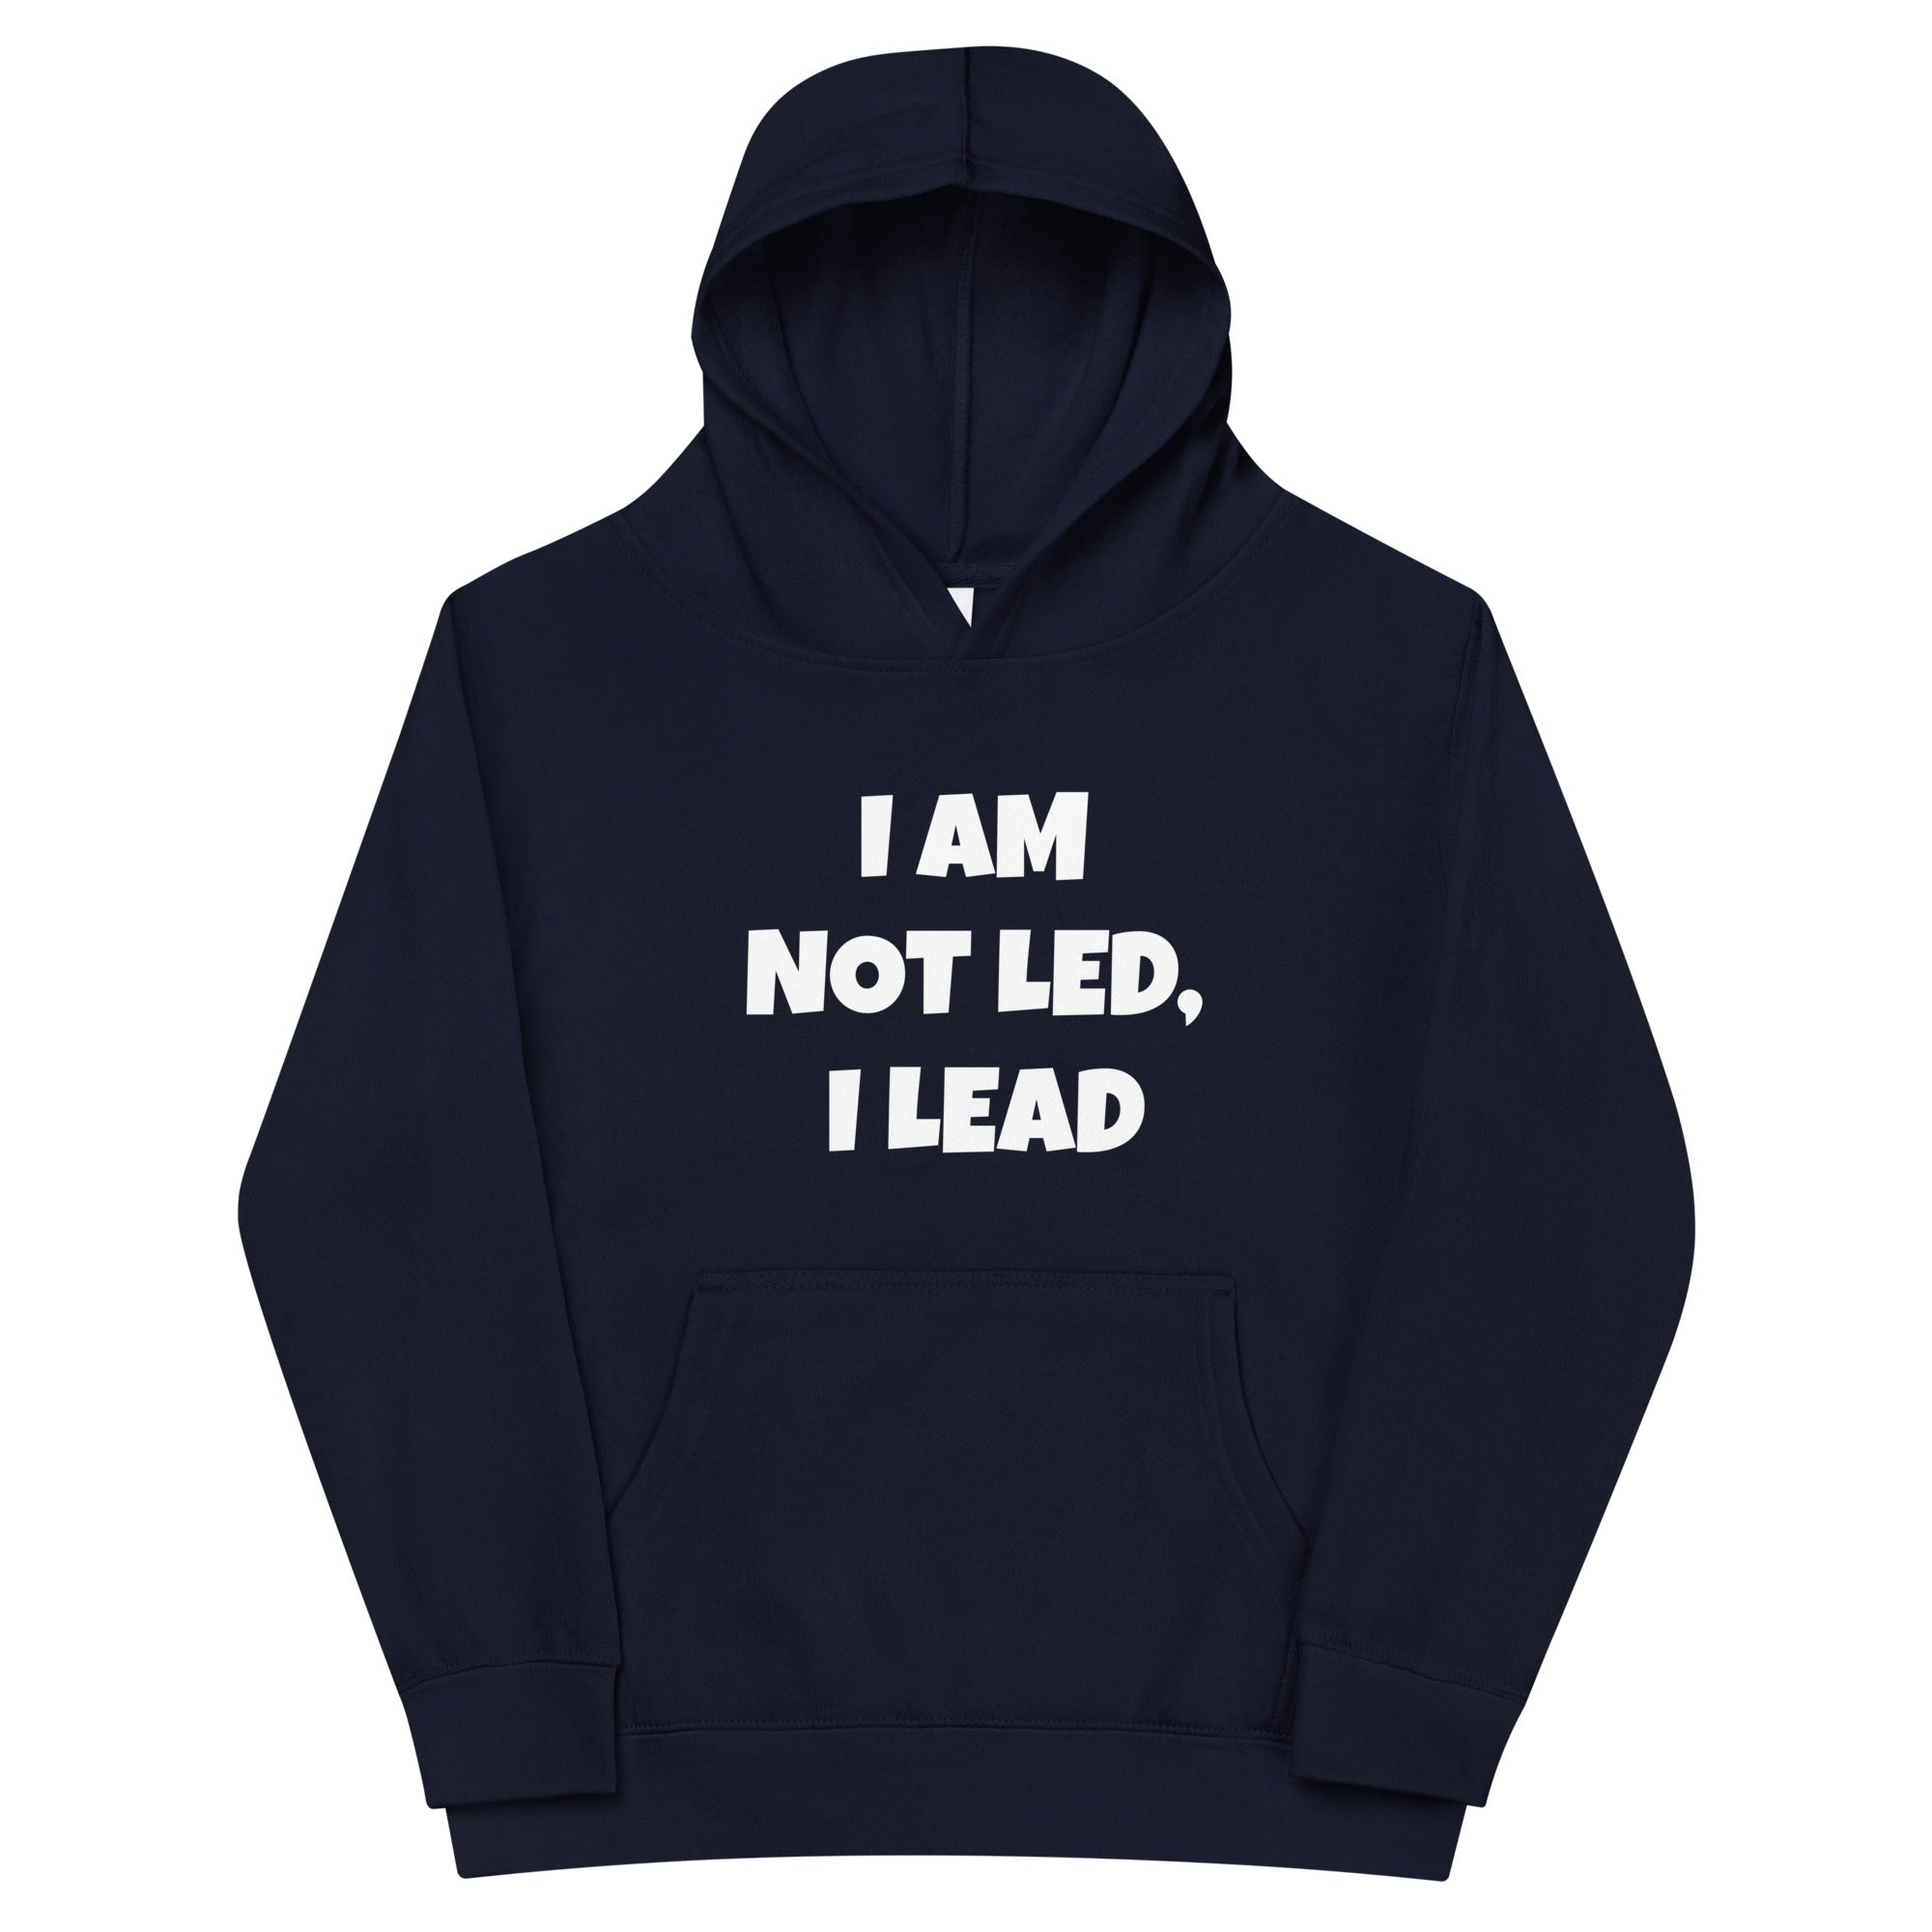 I AM NOT LED, I LEAD